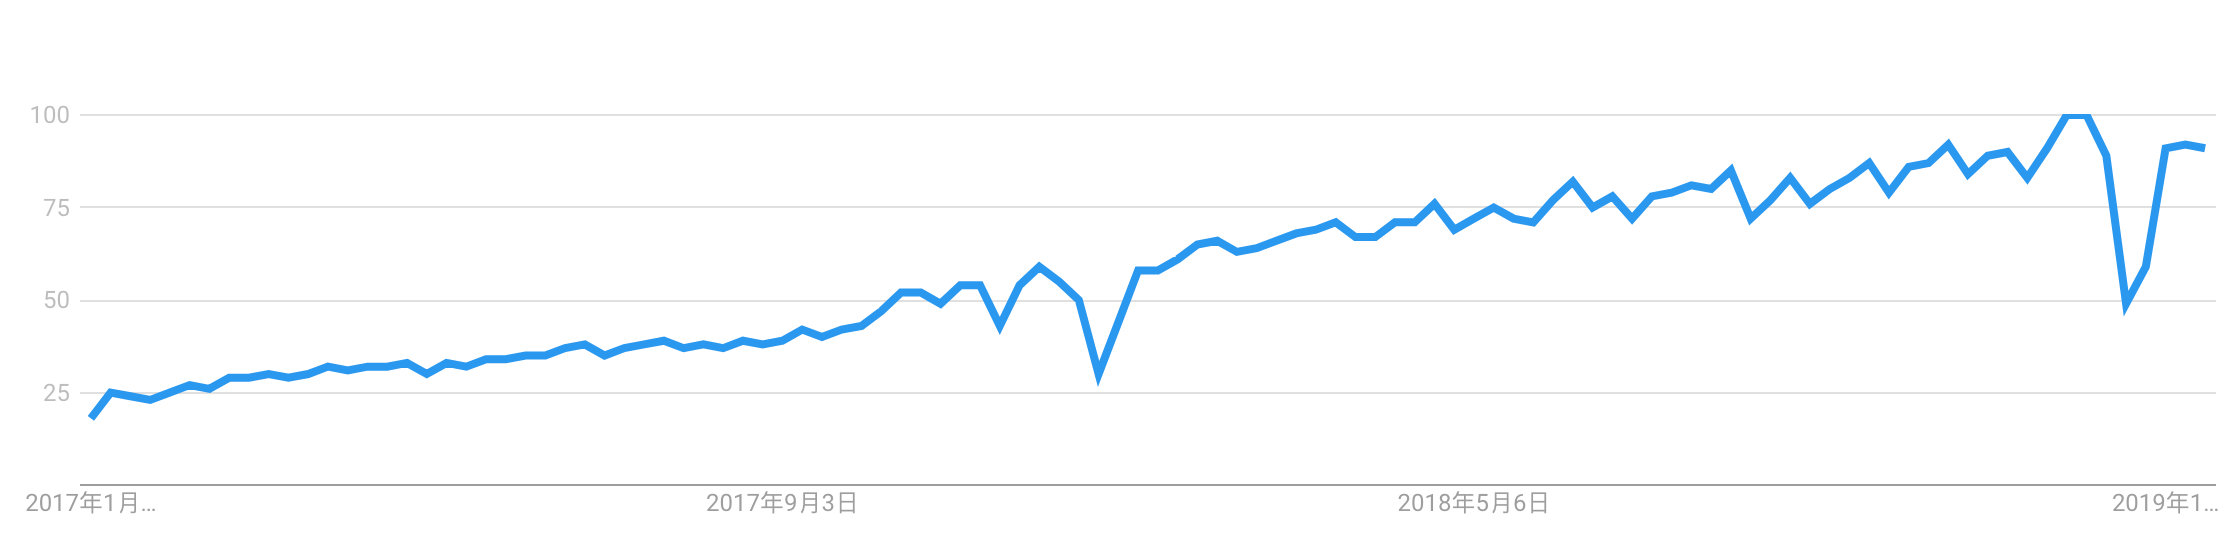 Kubernetes 搜索趋势(来自 Google trends)